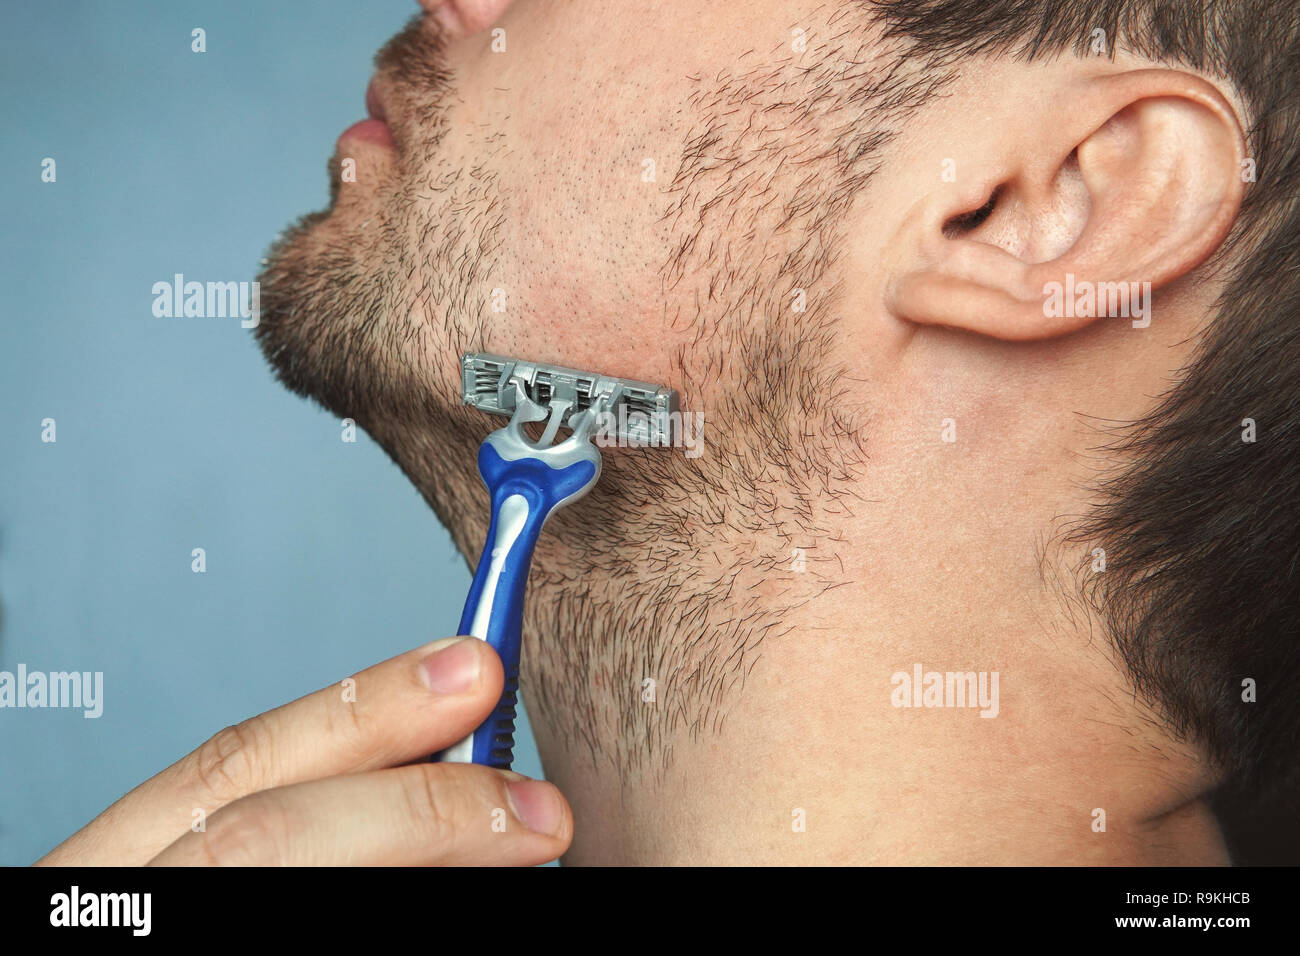 shave beard with razor